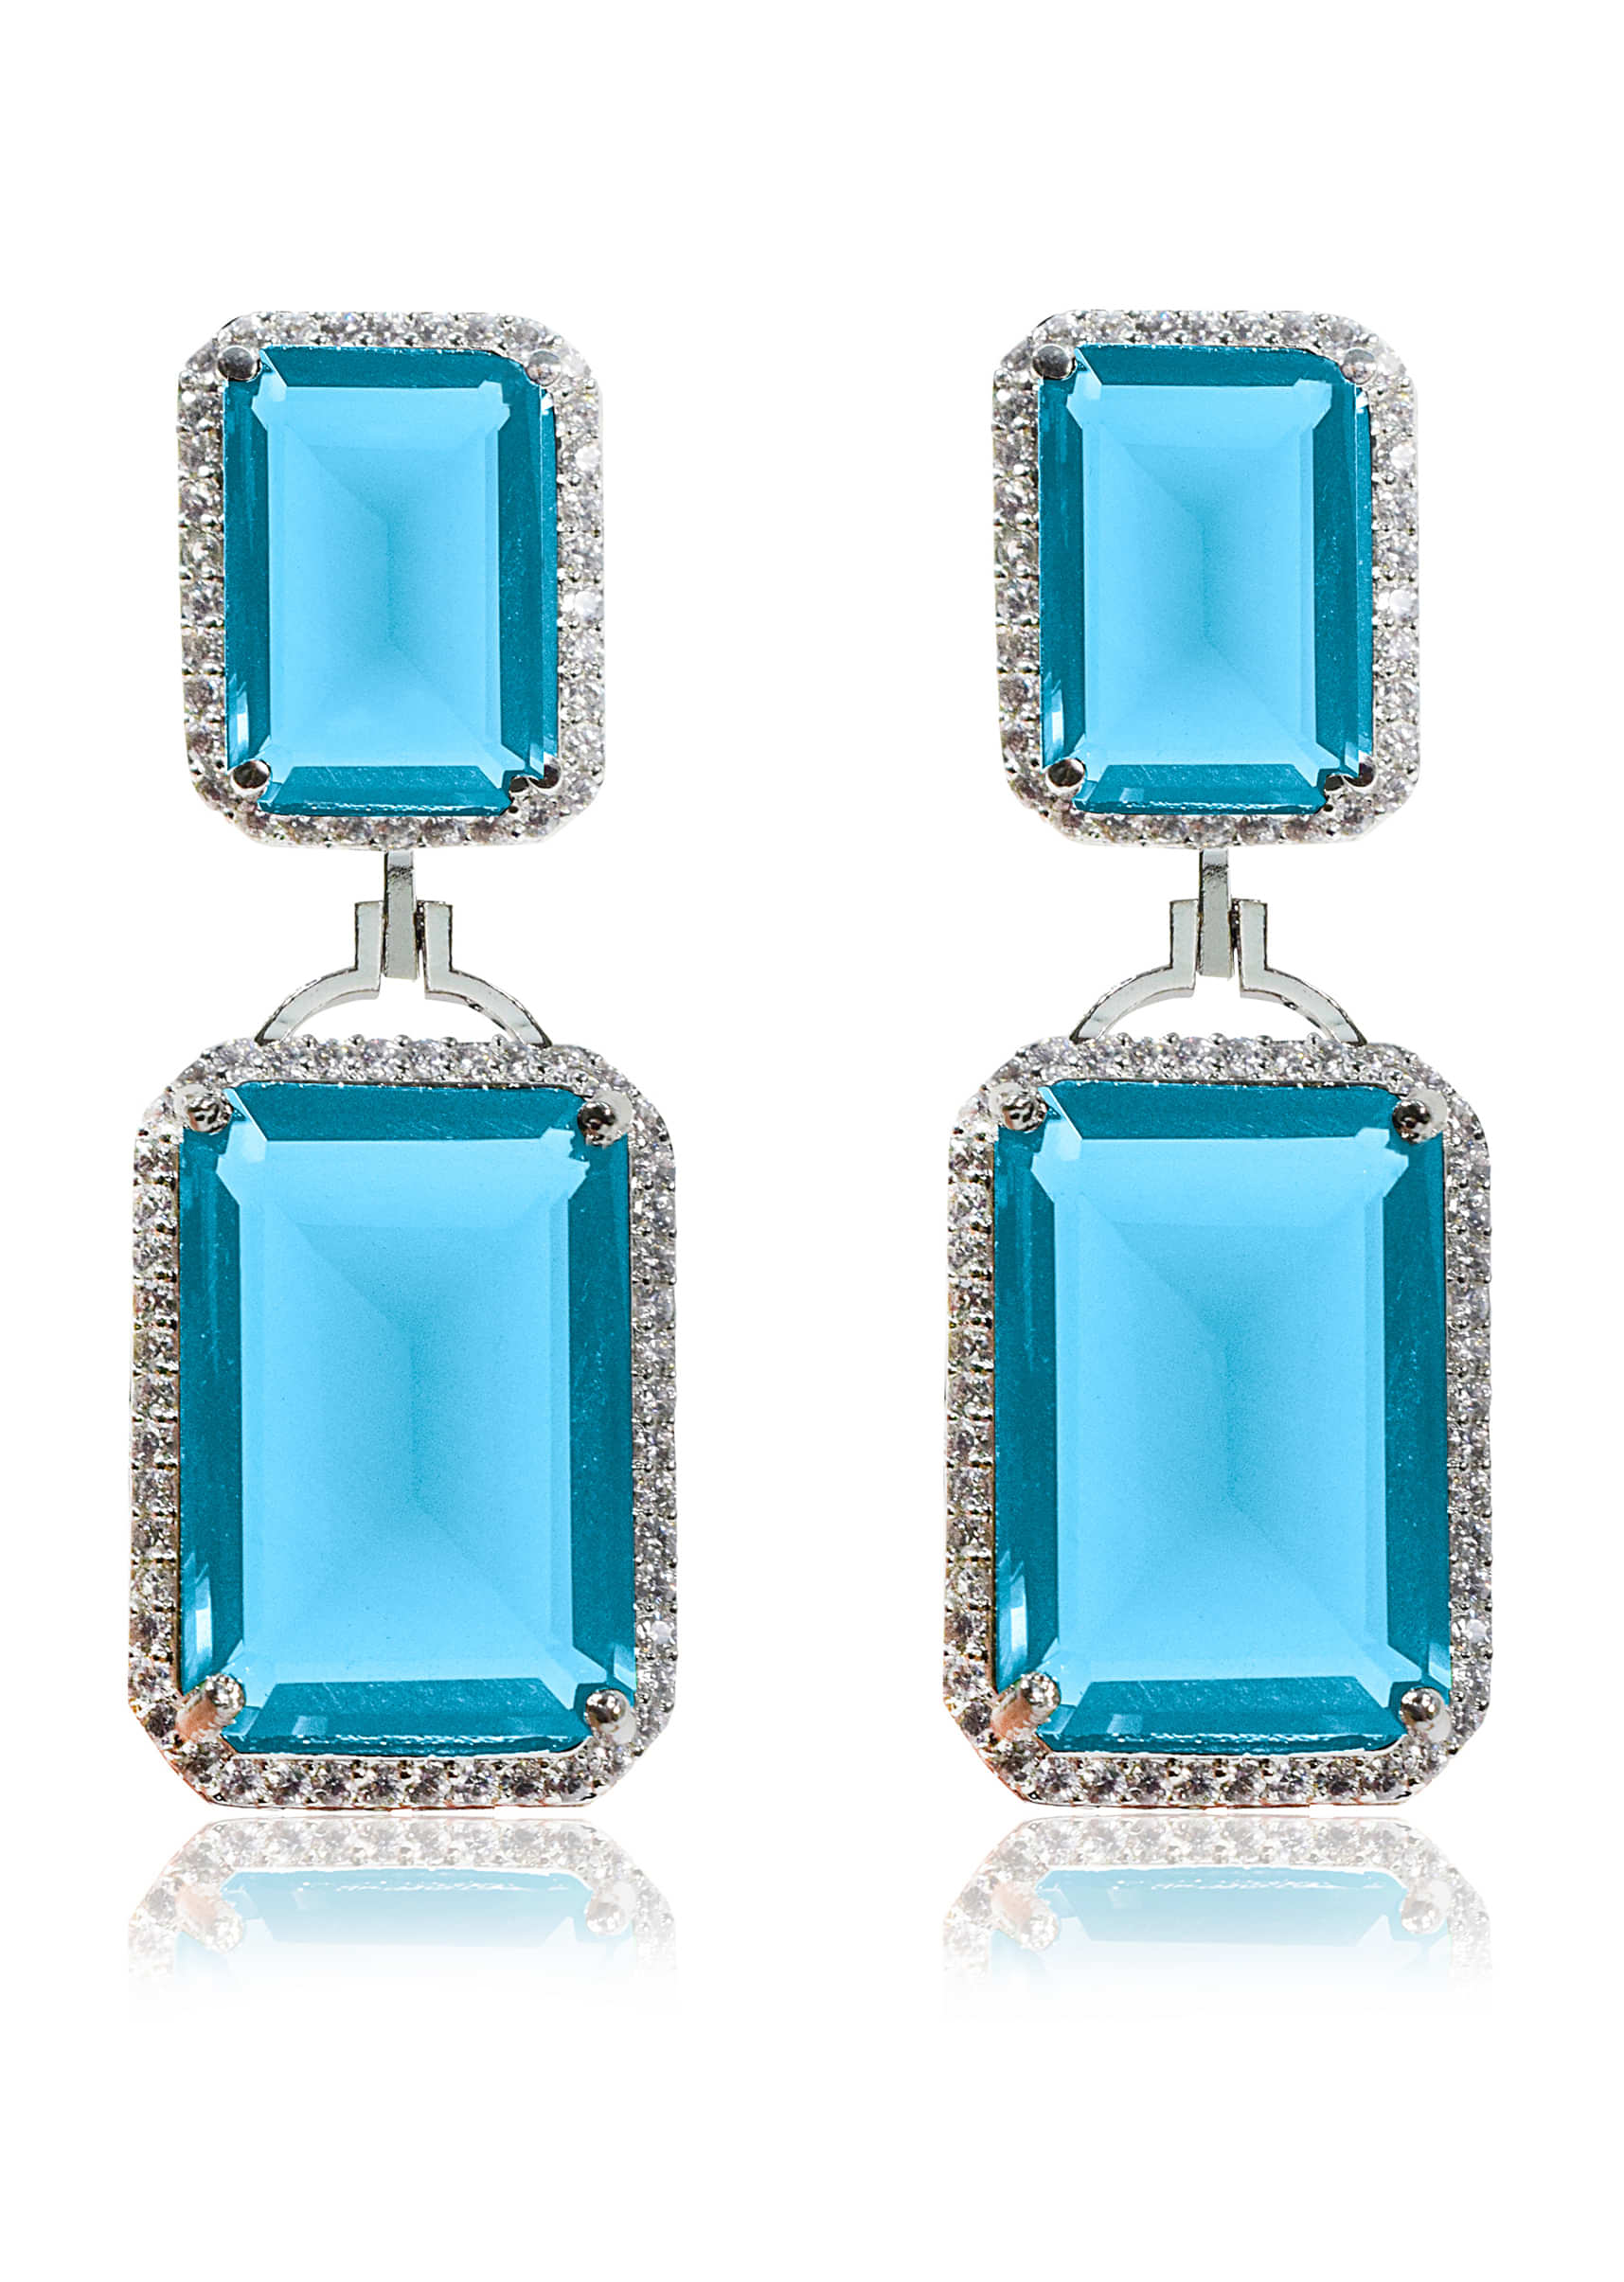 2 Aquamarine Stones Dangled Earrings With Faux Diamonds